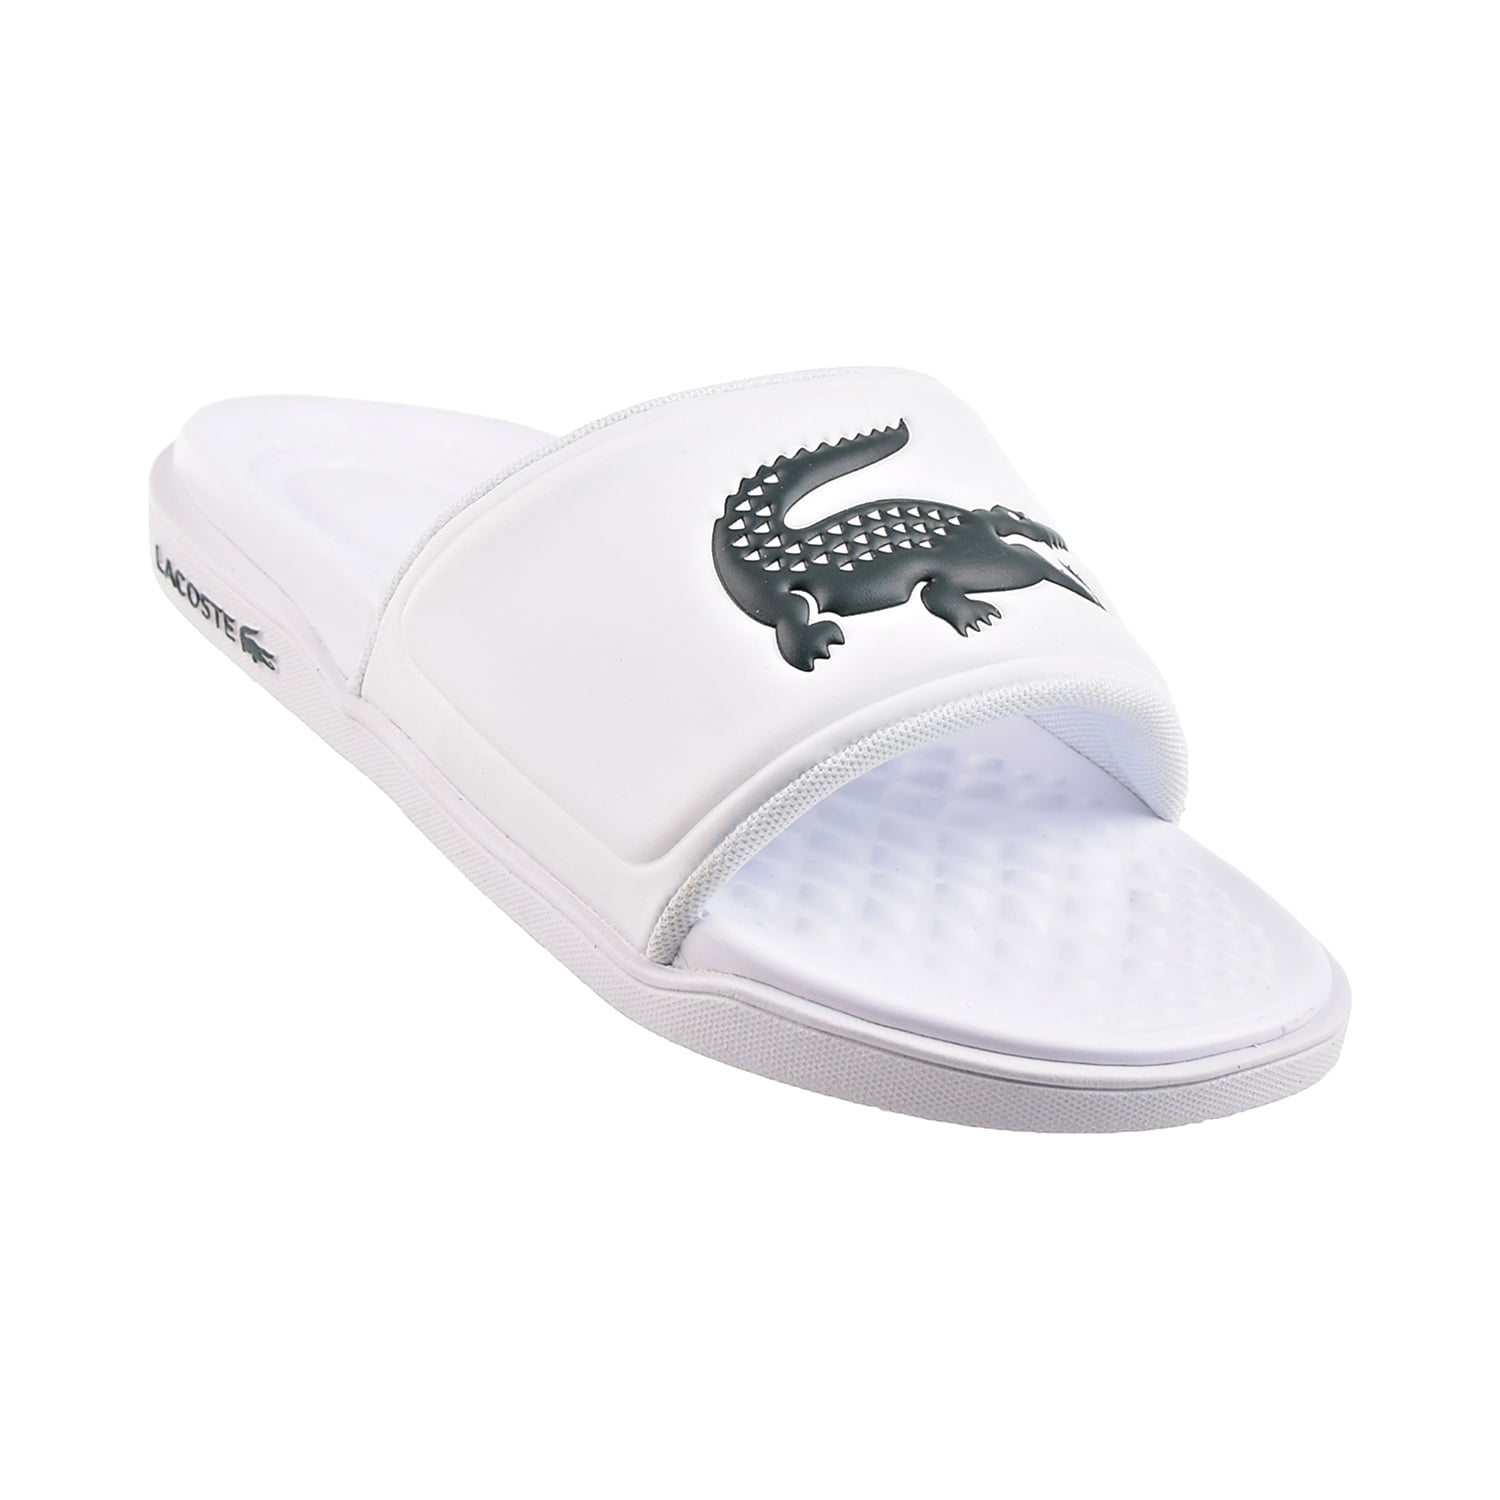 Lacoste Men's 2.0 Slide Sandals, Black \ White,11 M US Walmart.com